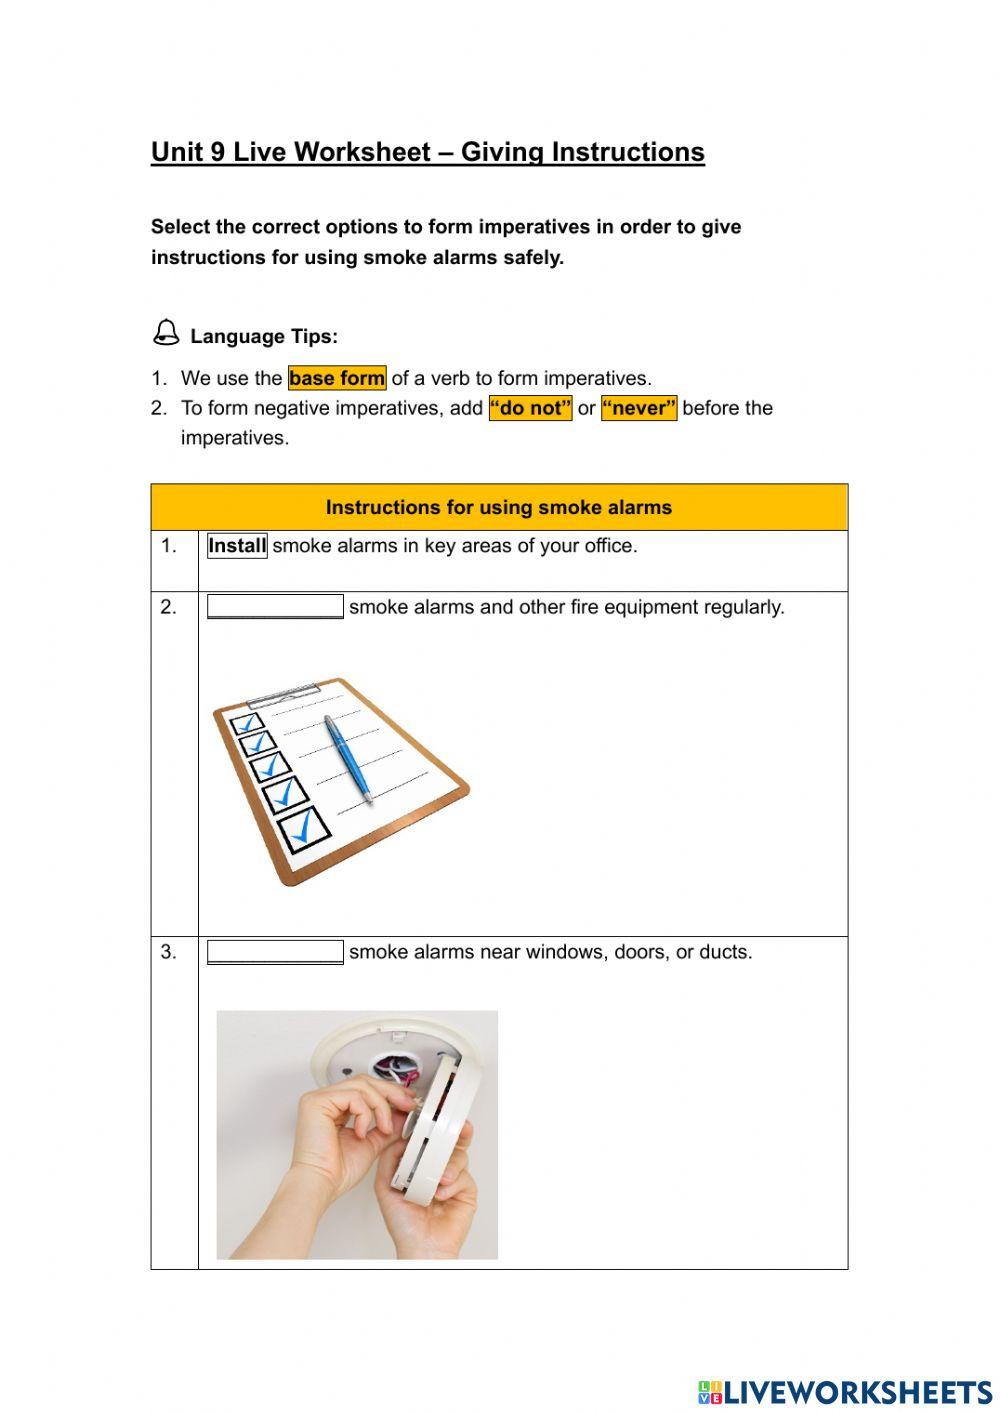 Unit 9 Live Worksheet 1 - Giving Instructions